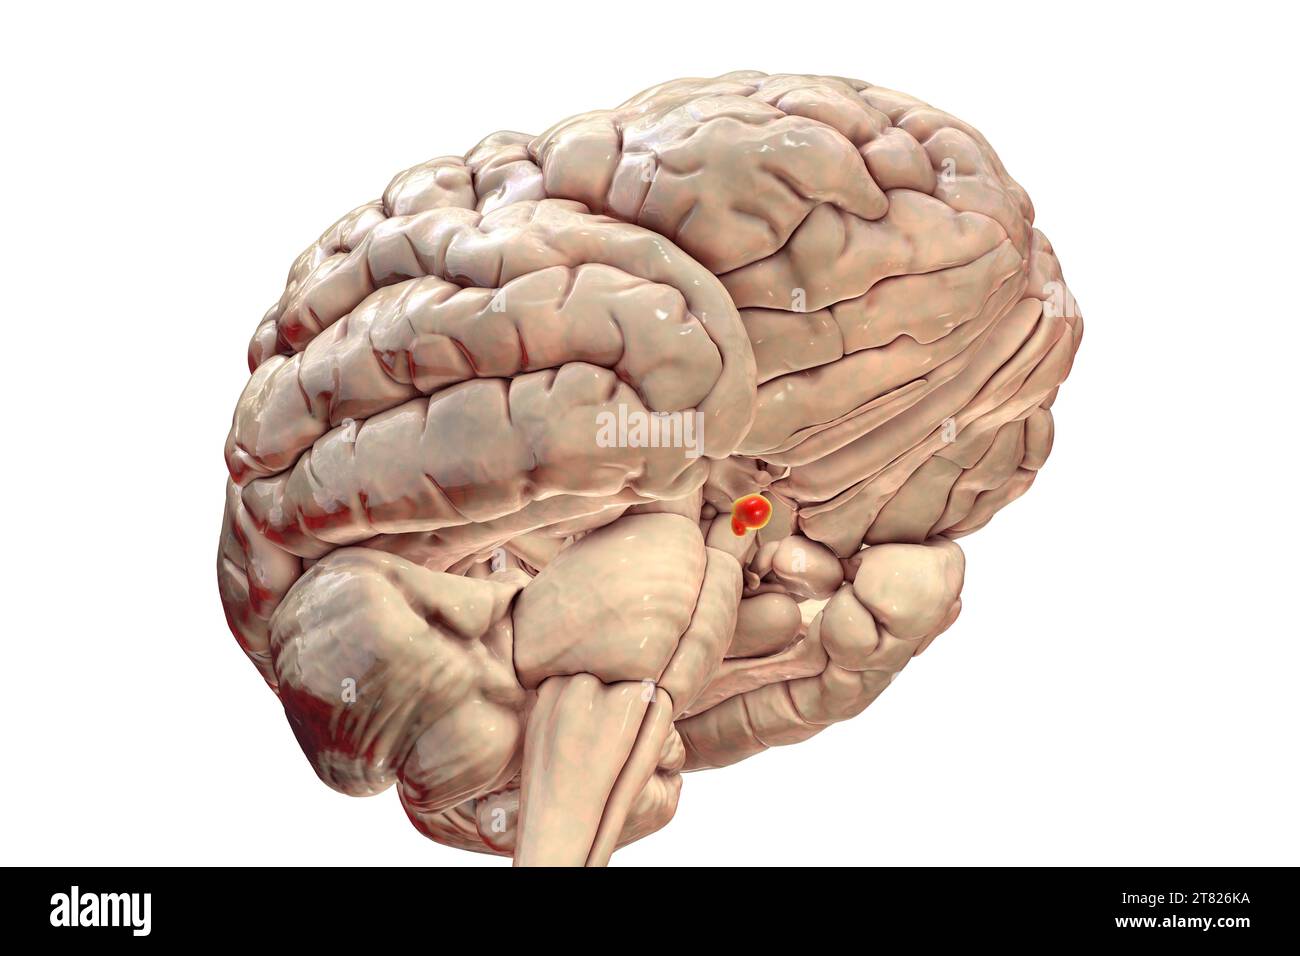 Pituitary gland anatomy, illustration Stock Photo